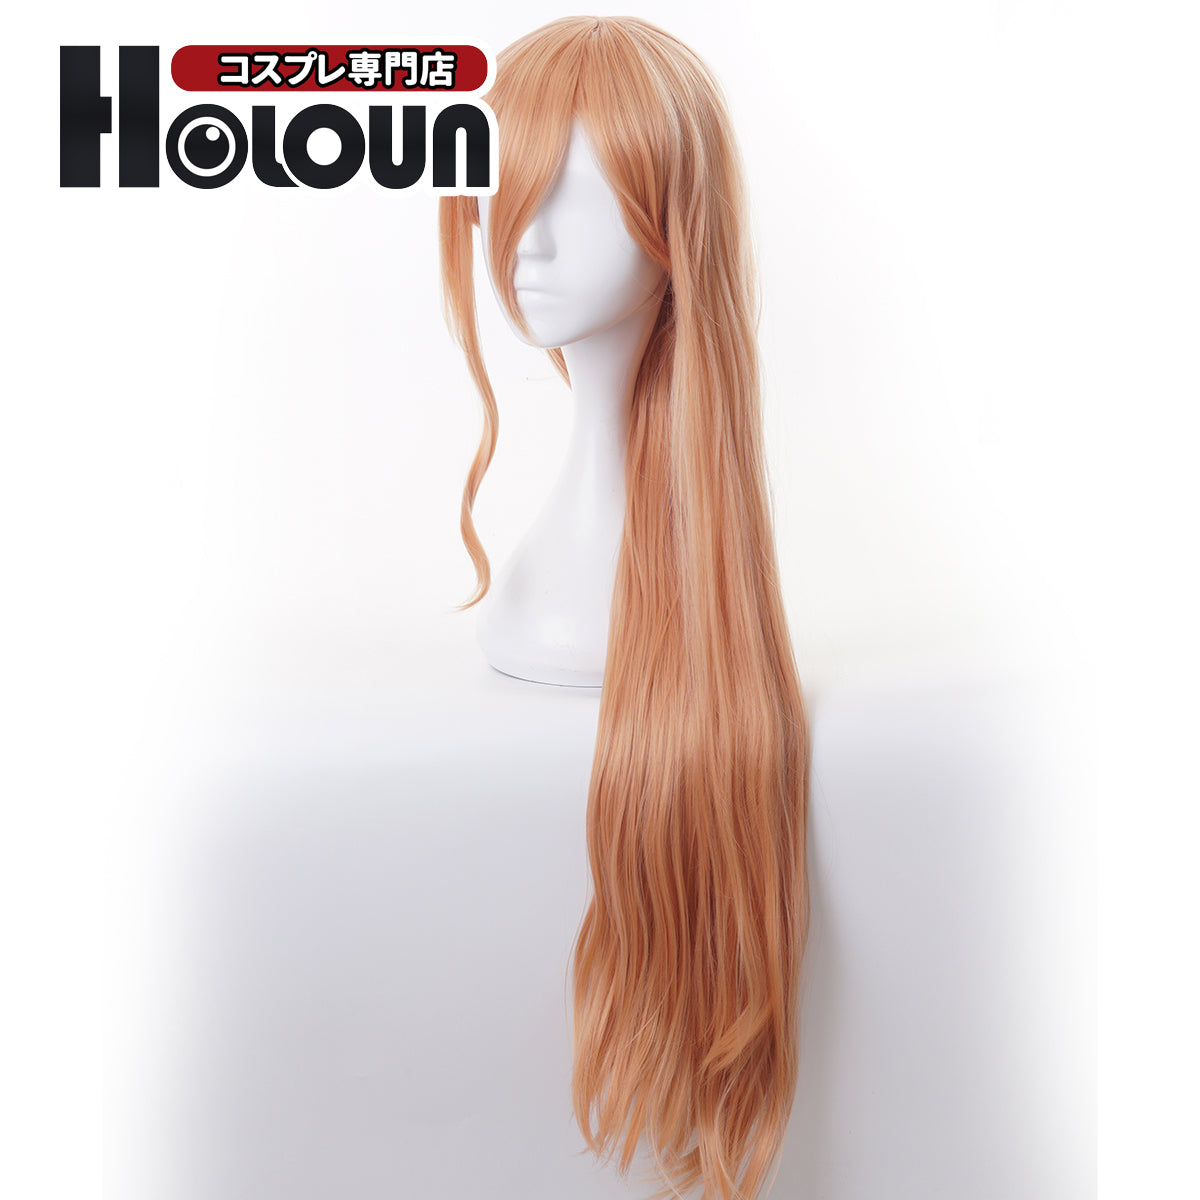 HOLOUN Anime Cosplay Universal Wig For Chainsaw Power Fake Hair Halloween Christmas Party Gift New